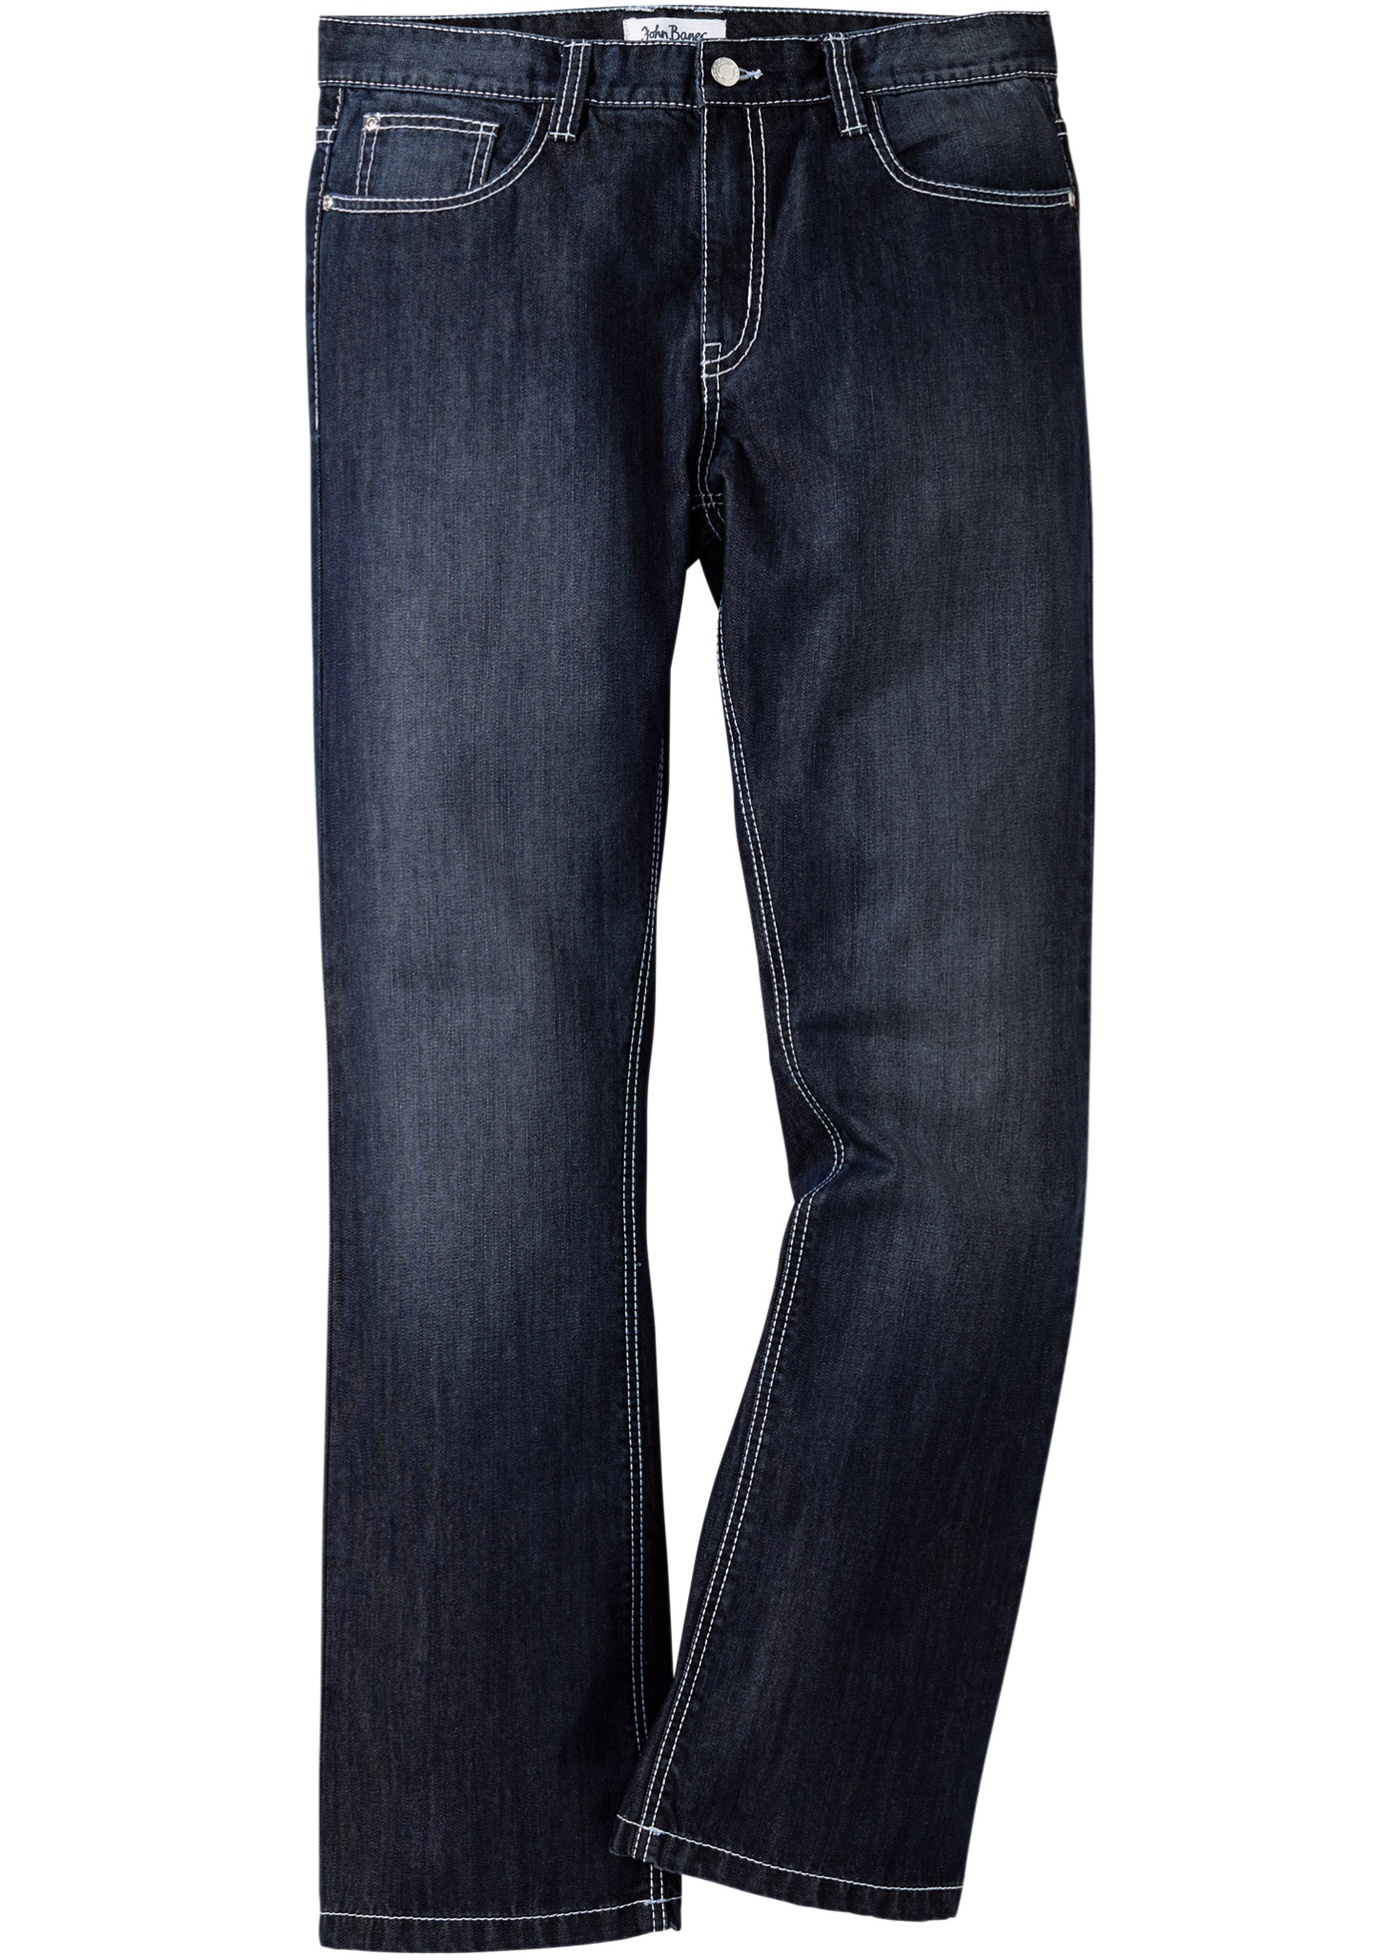 Jeans regular fit bootcut, större+mindre vidd